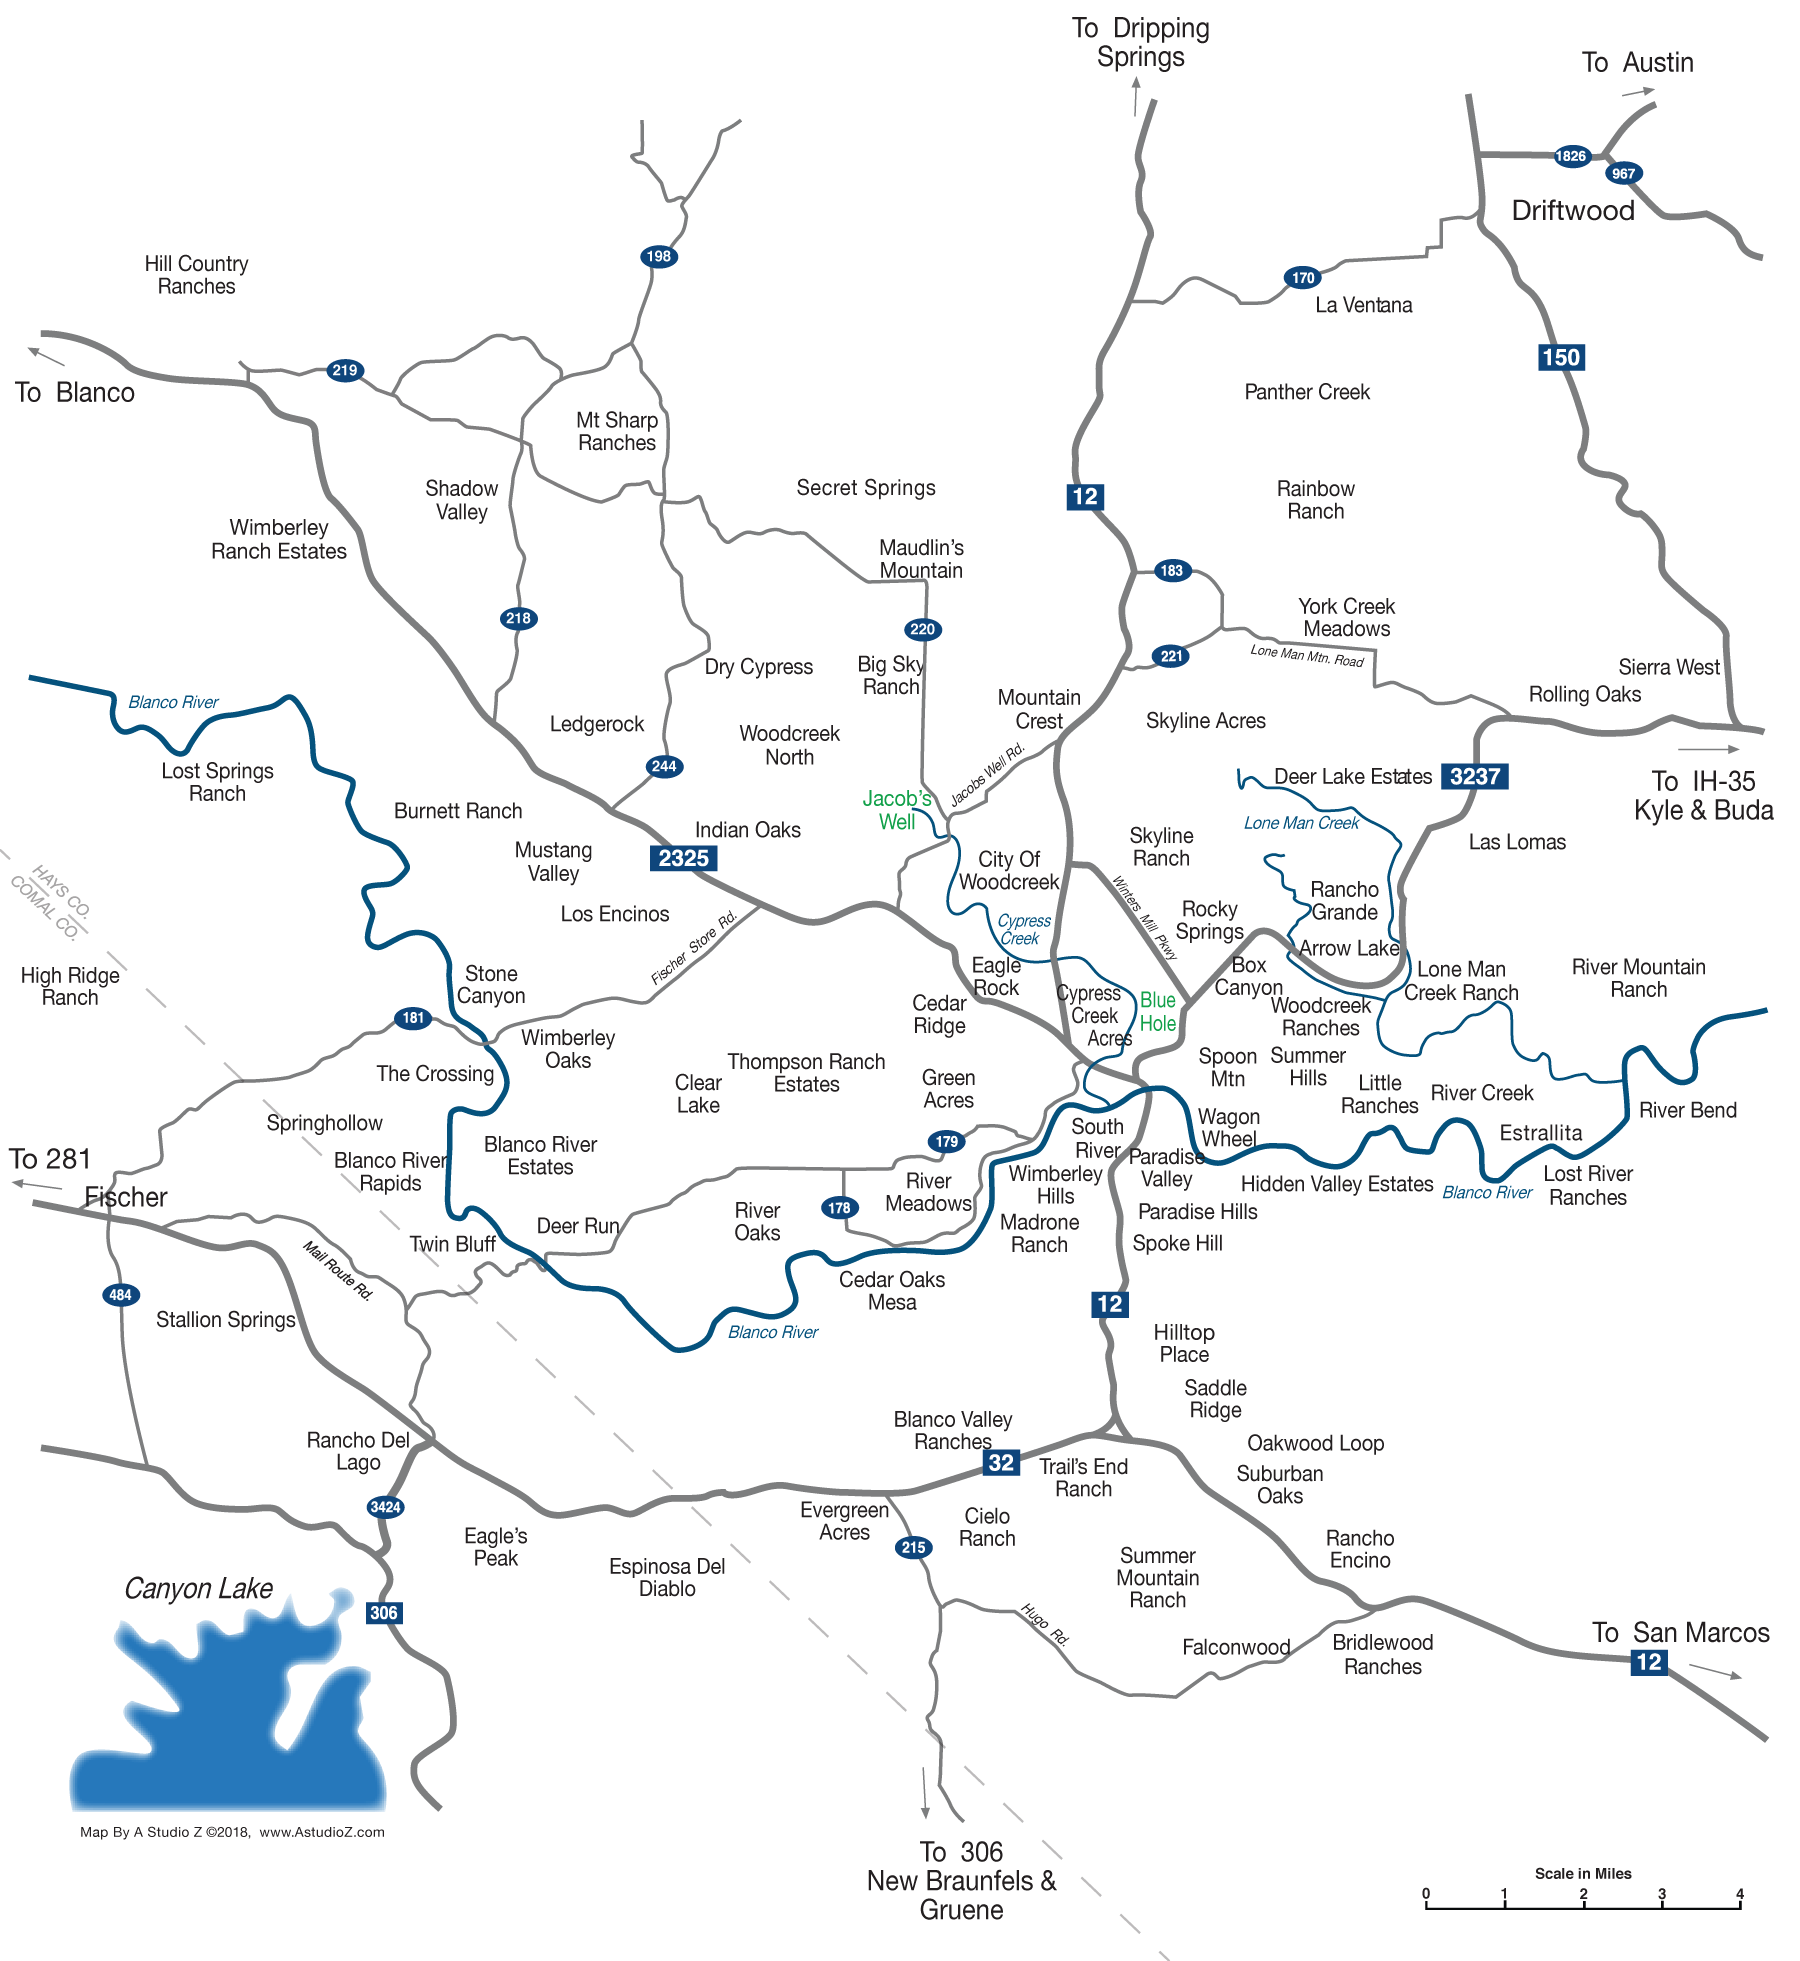 Map of Wimberley